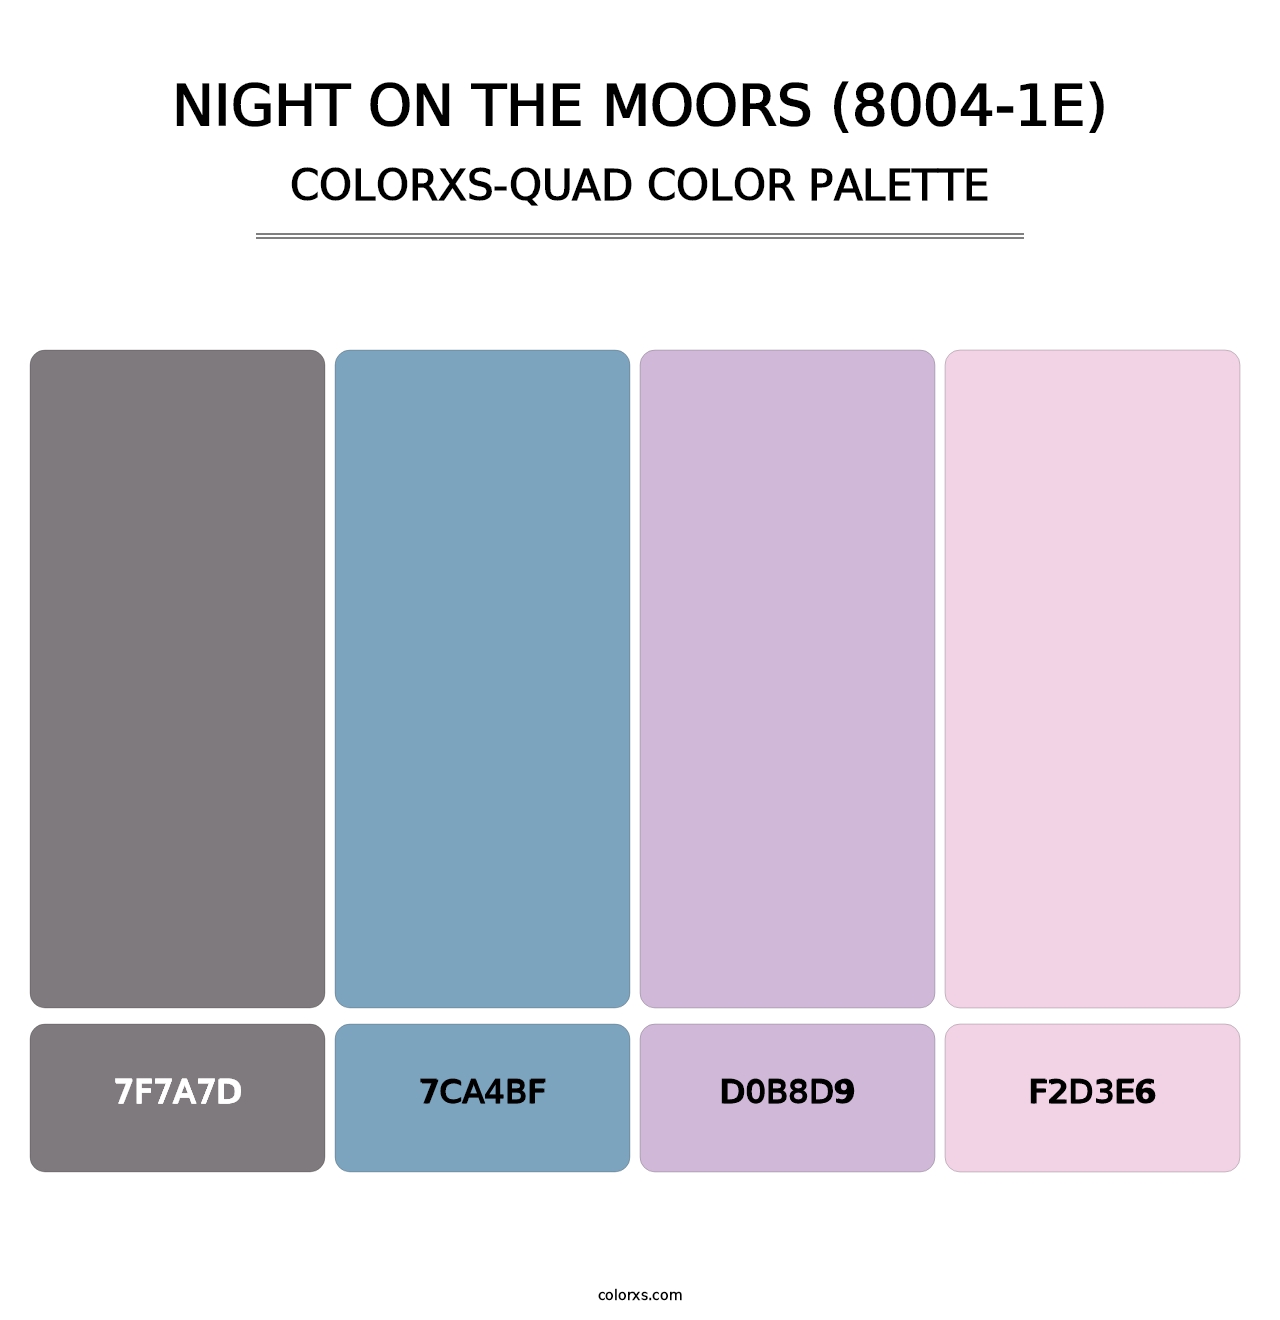 Night on the Moors (8004-1E) - Colorxs Quad Palette